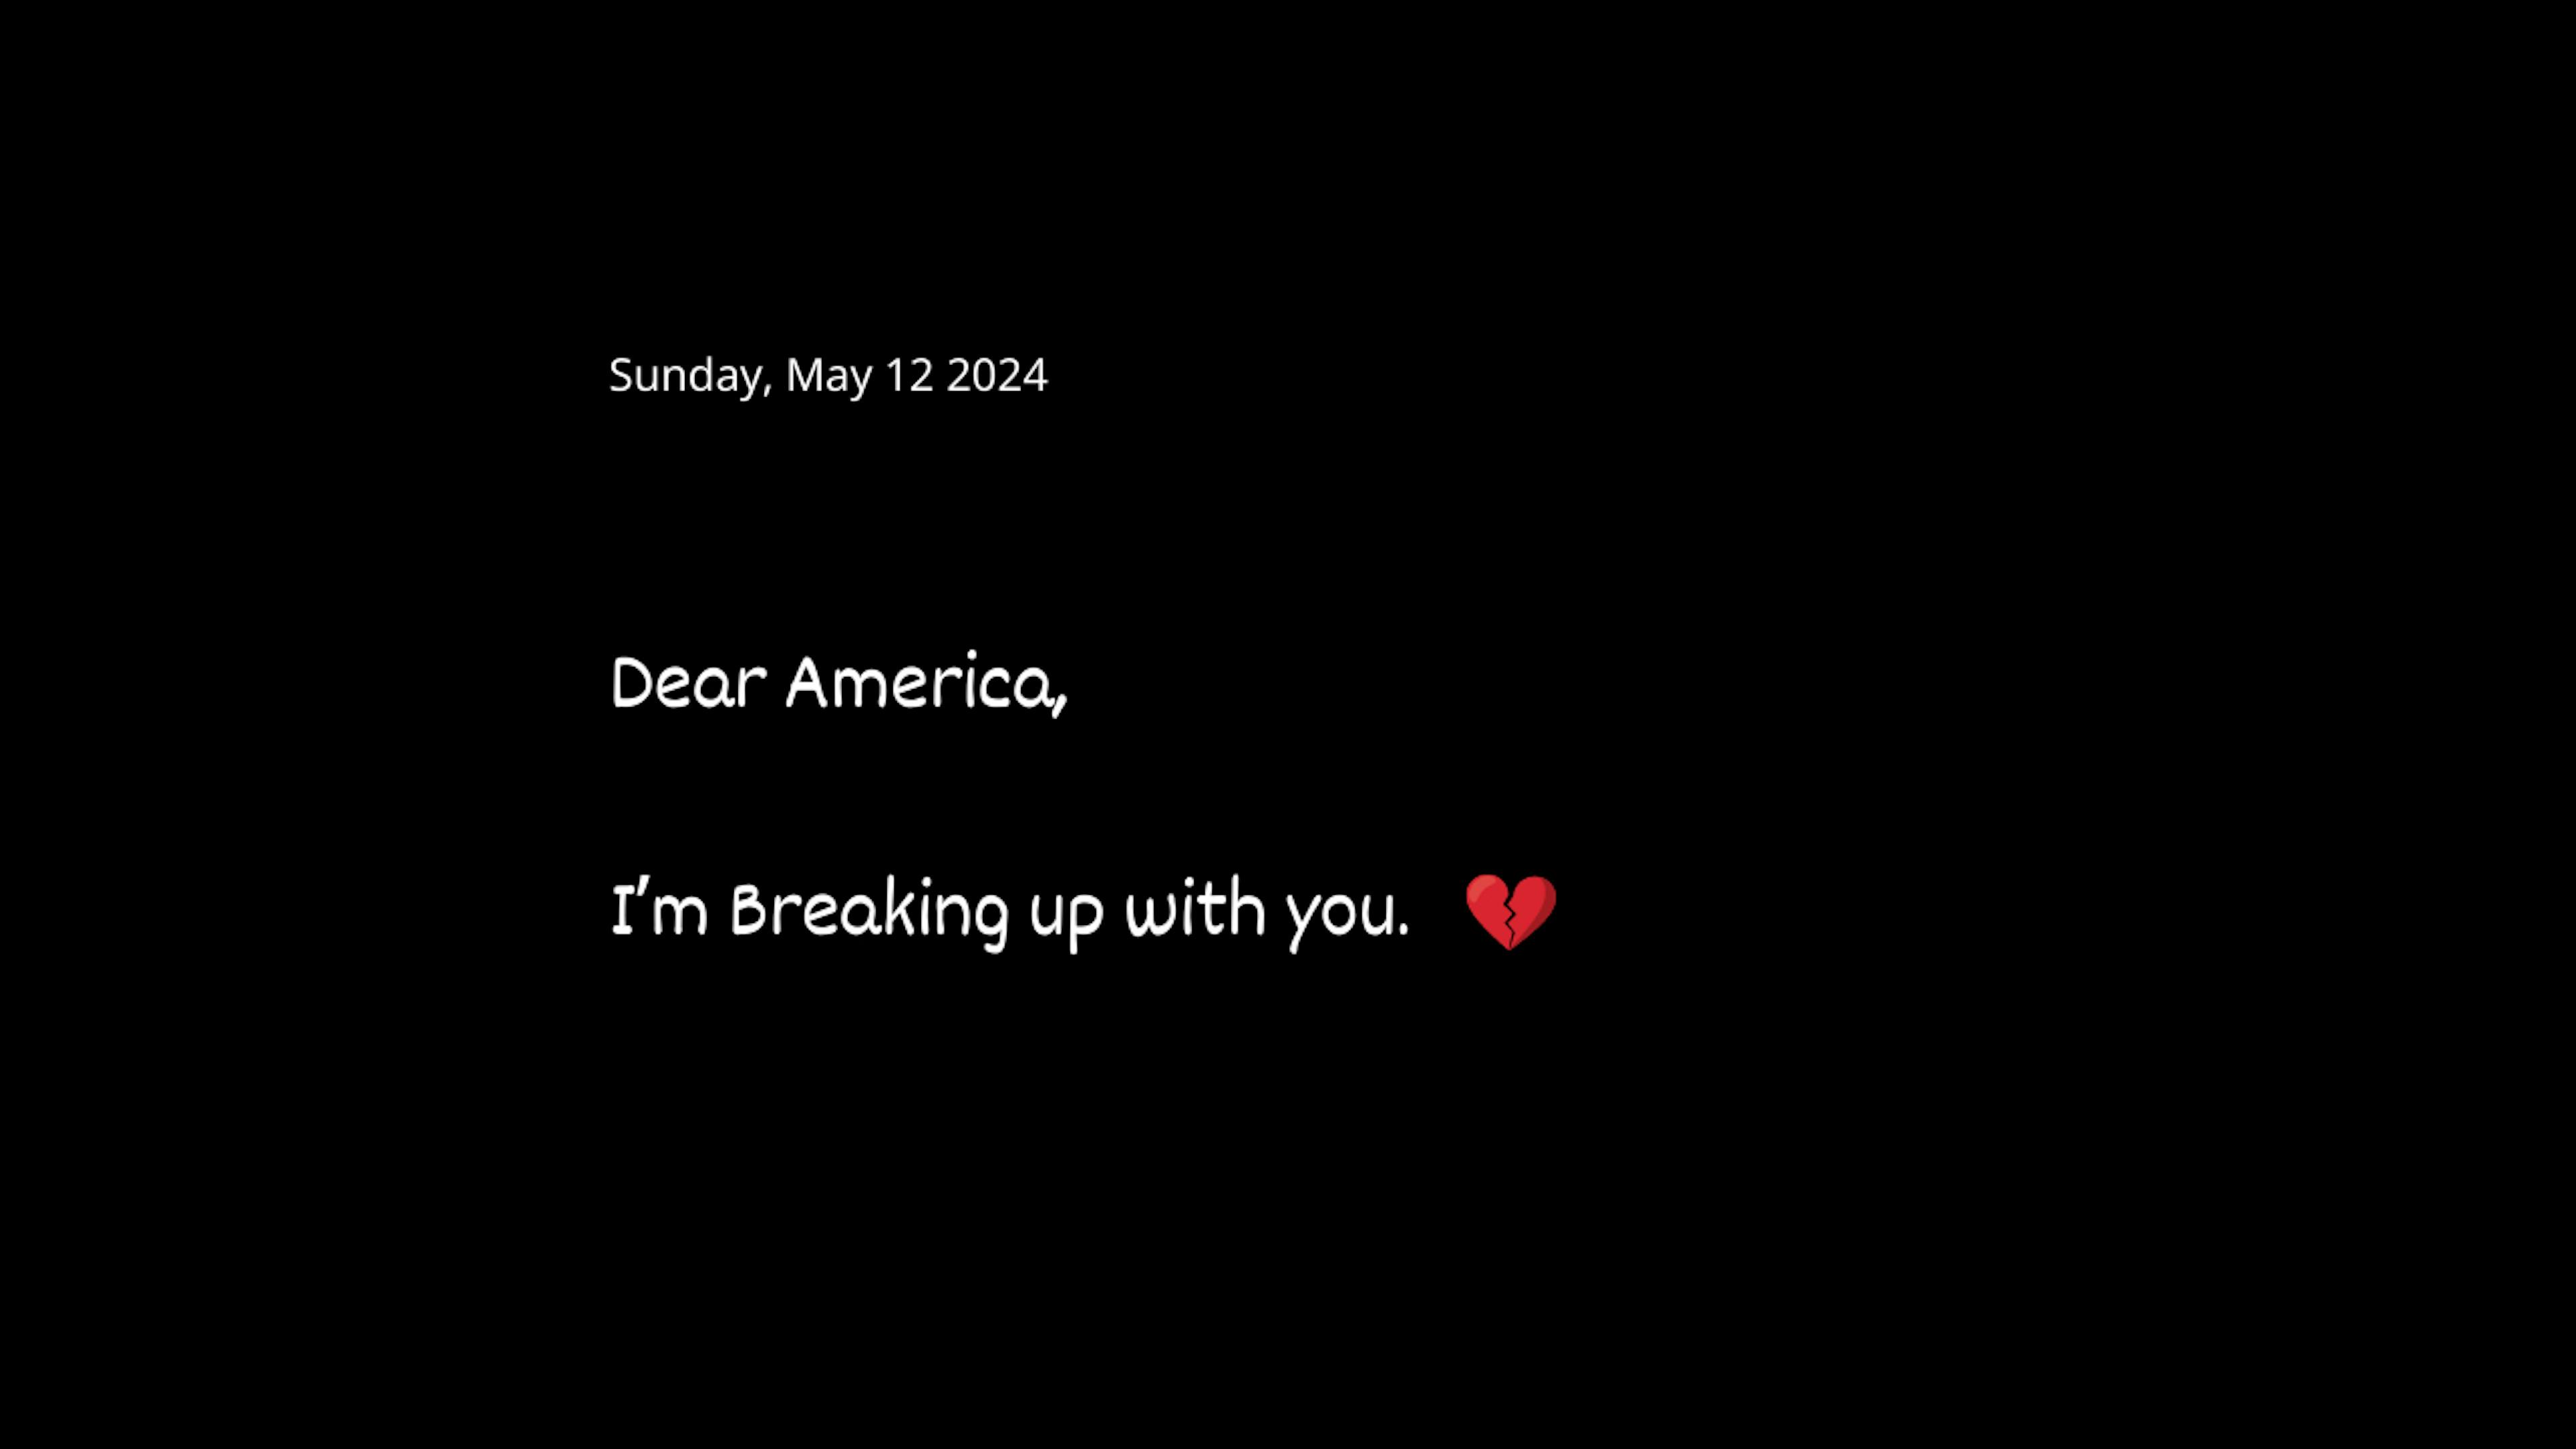 featured image - 사랑하는 미국이여, 나는 당신과 헤어지고 있습니다